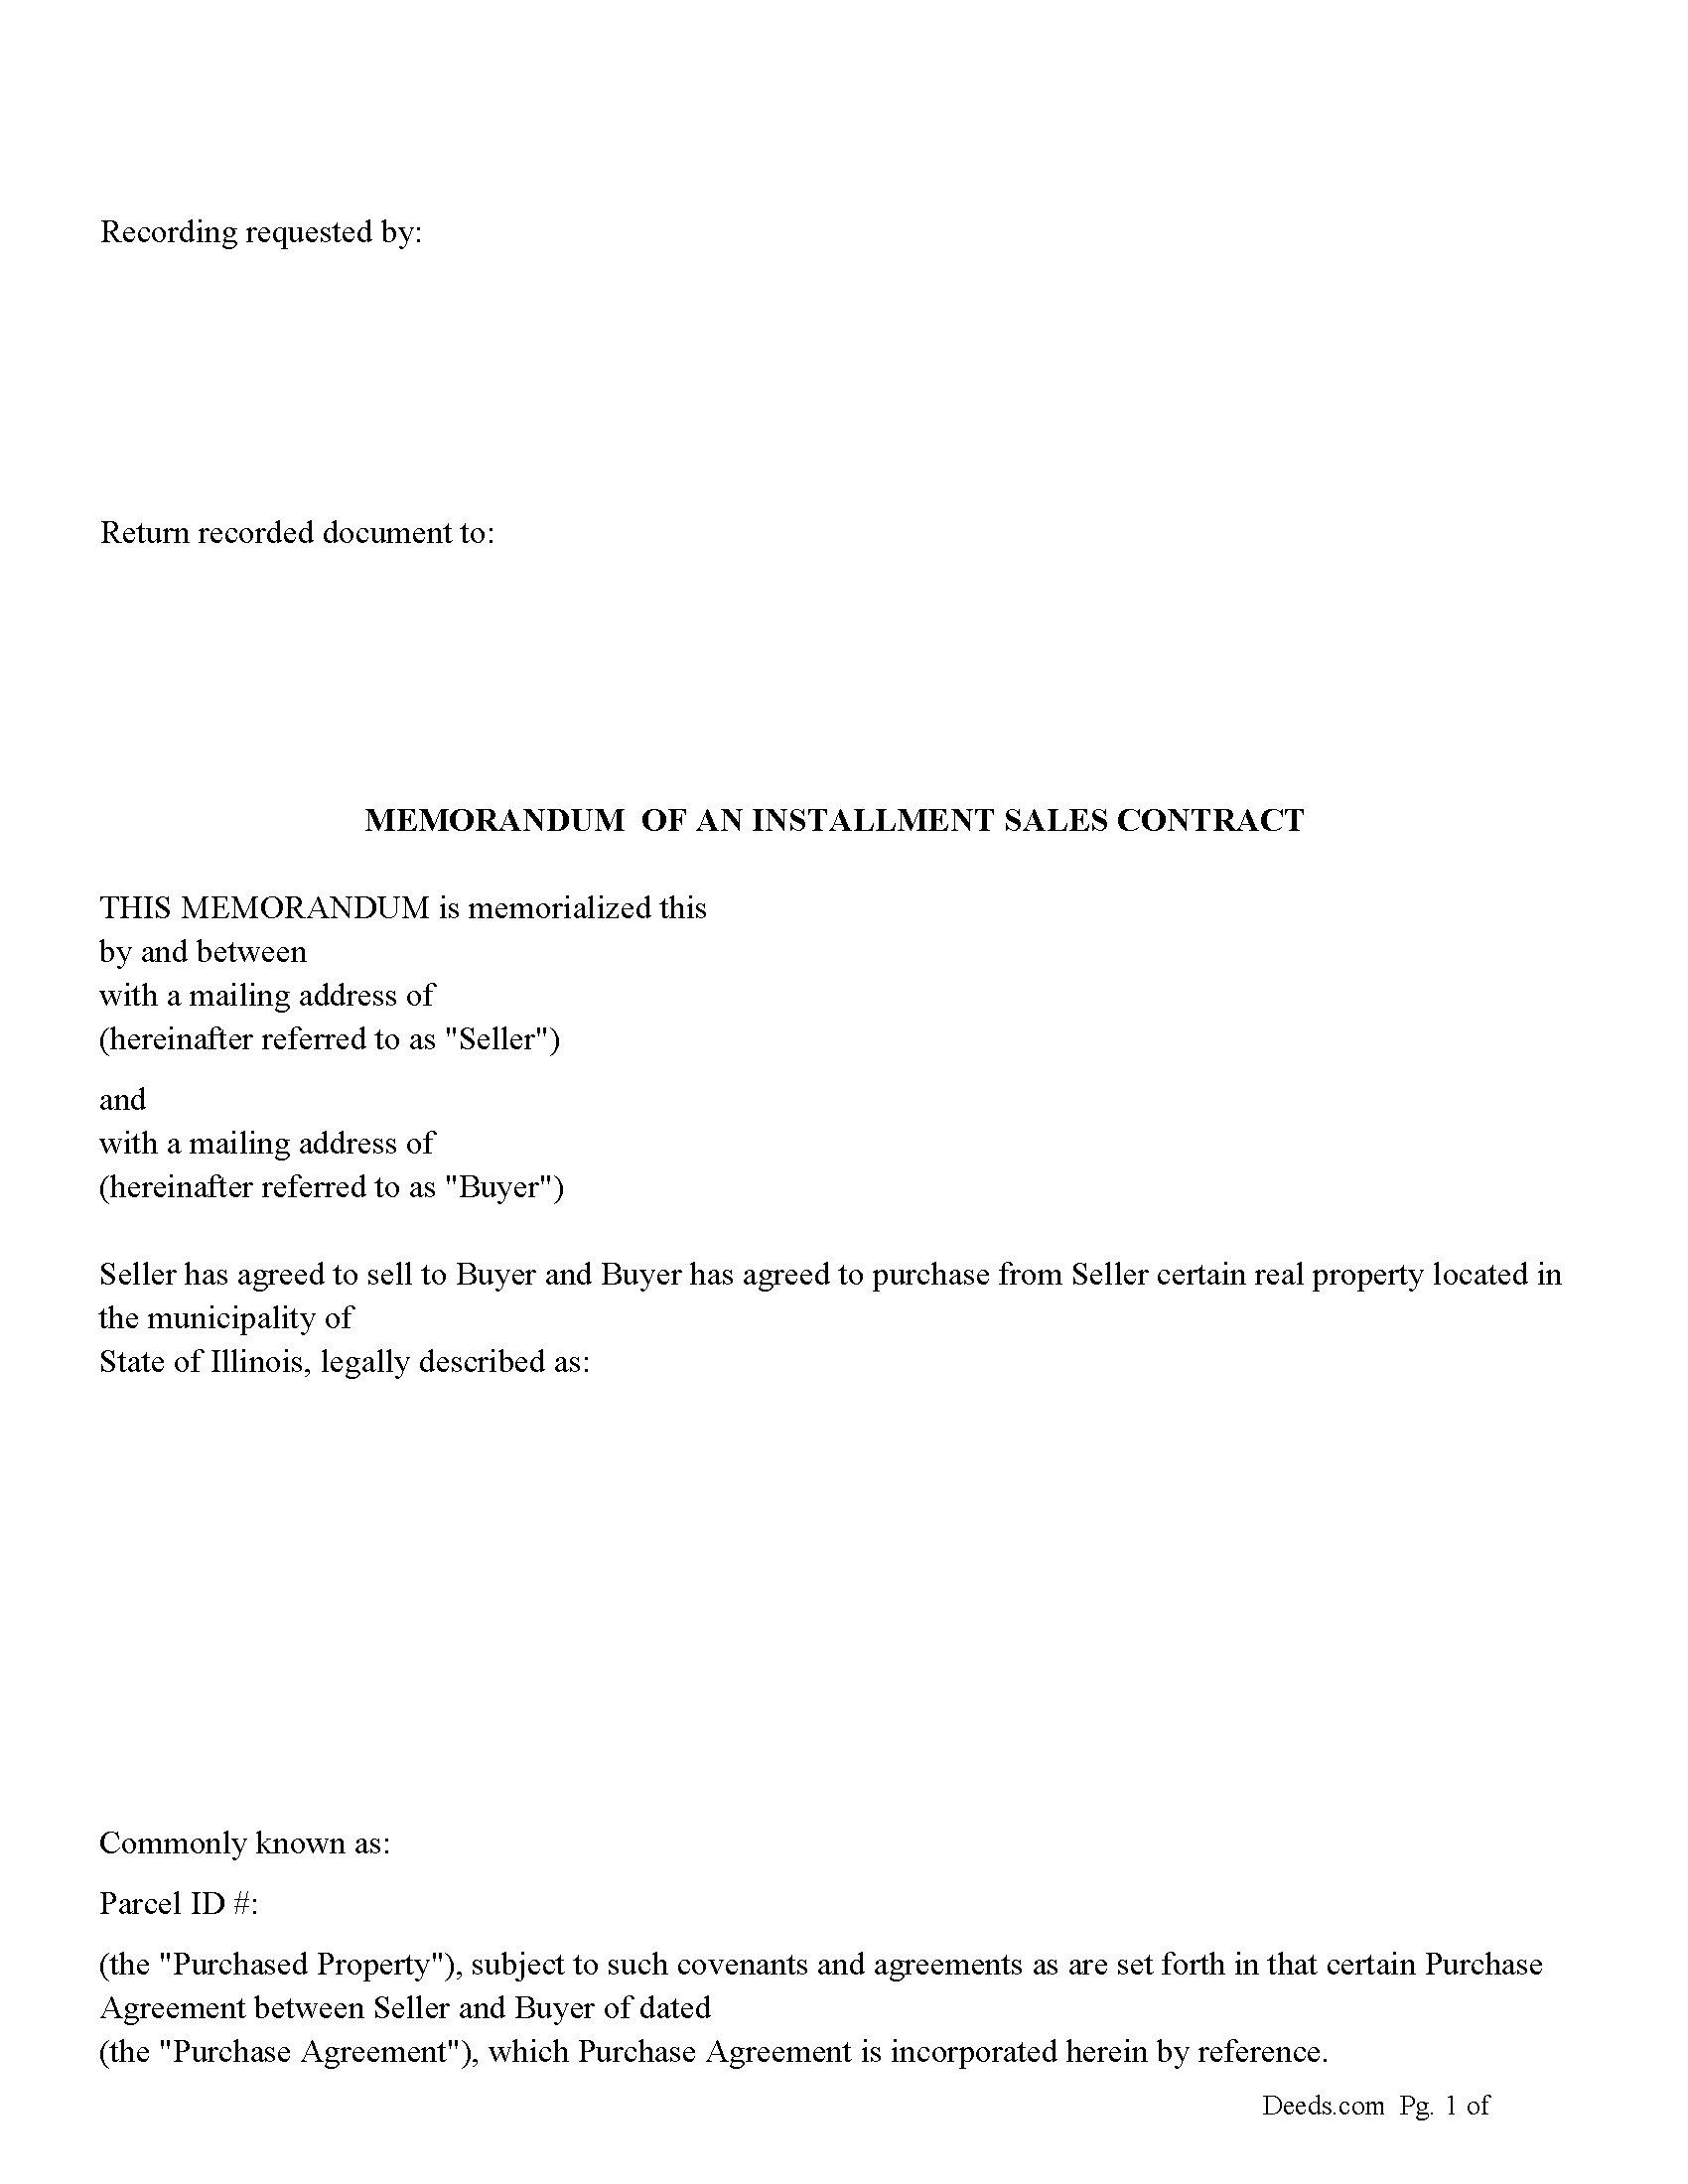 Macon County Memorandum of an Installment Sales Contract Form